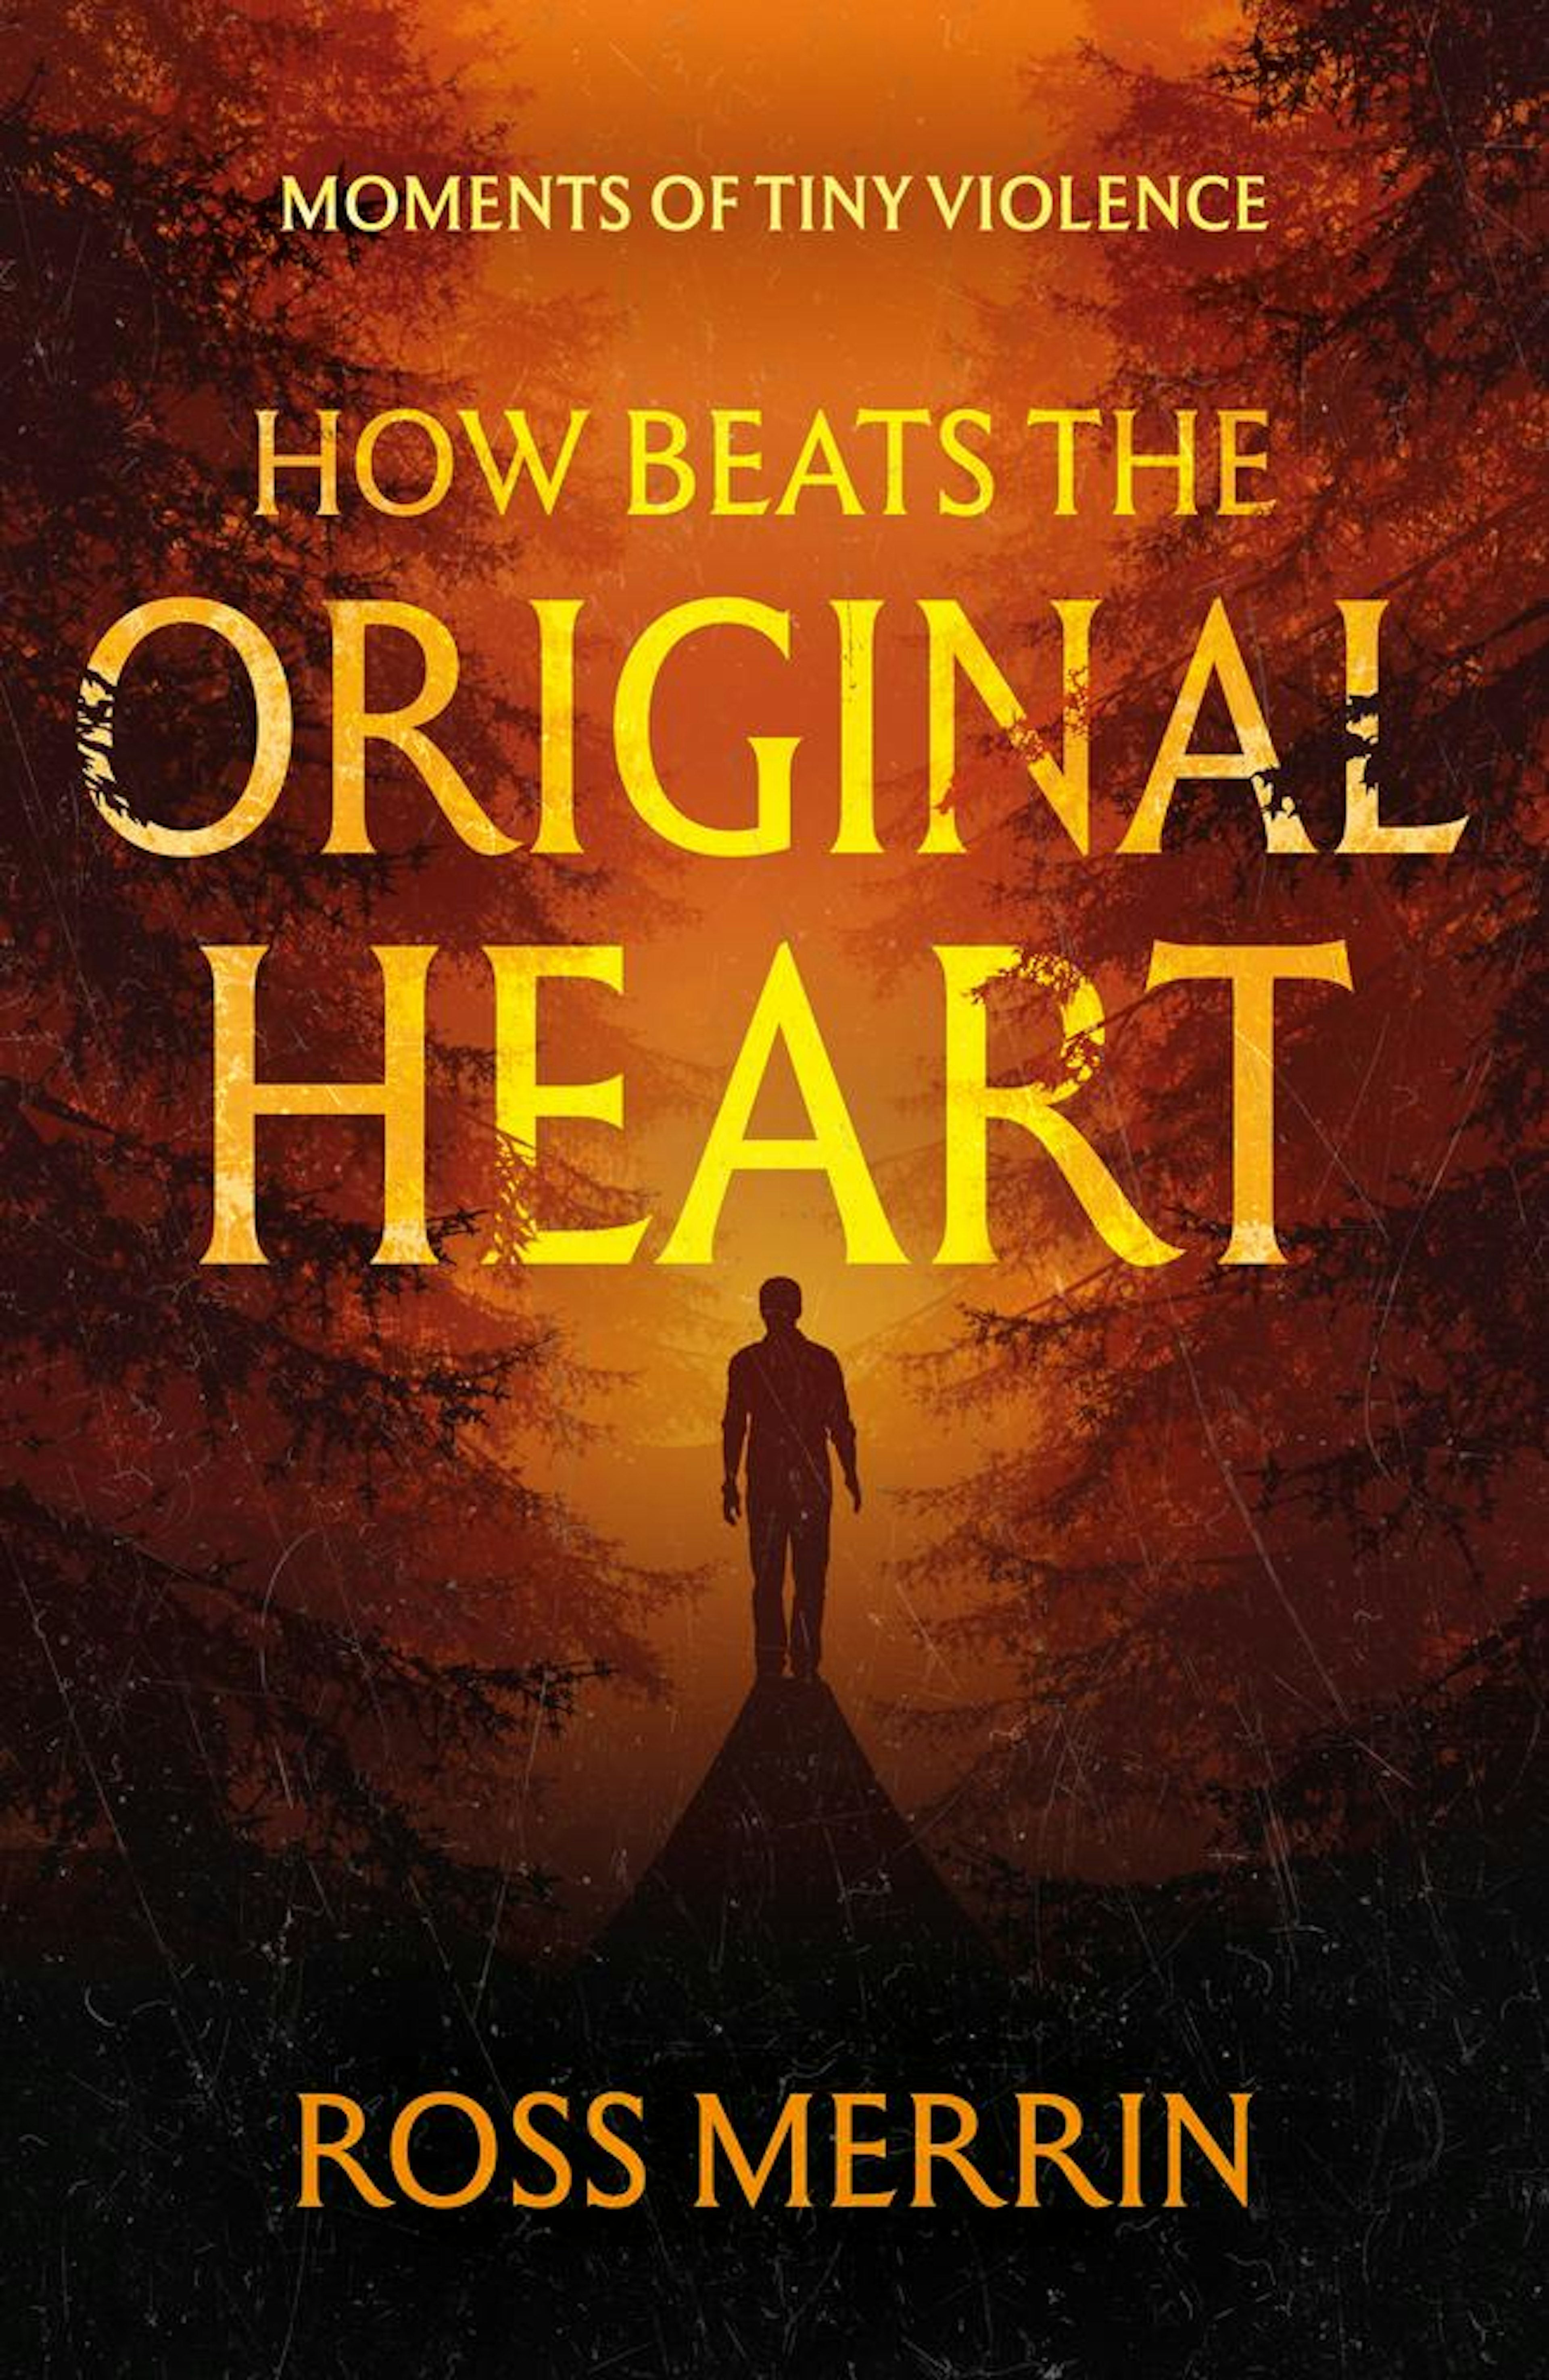 How Beats the Original Heart